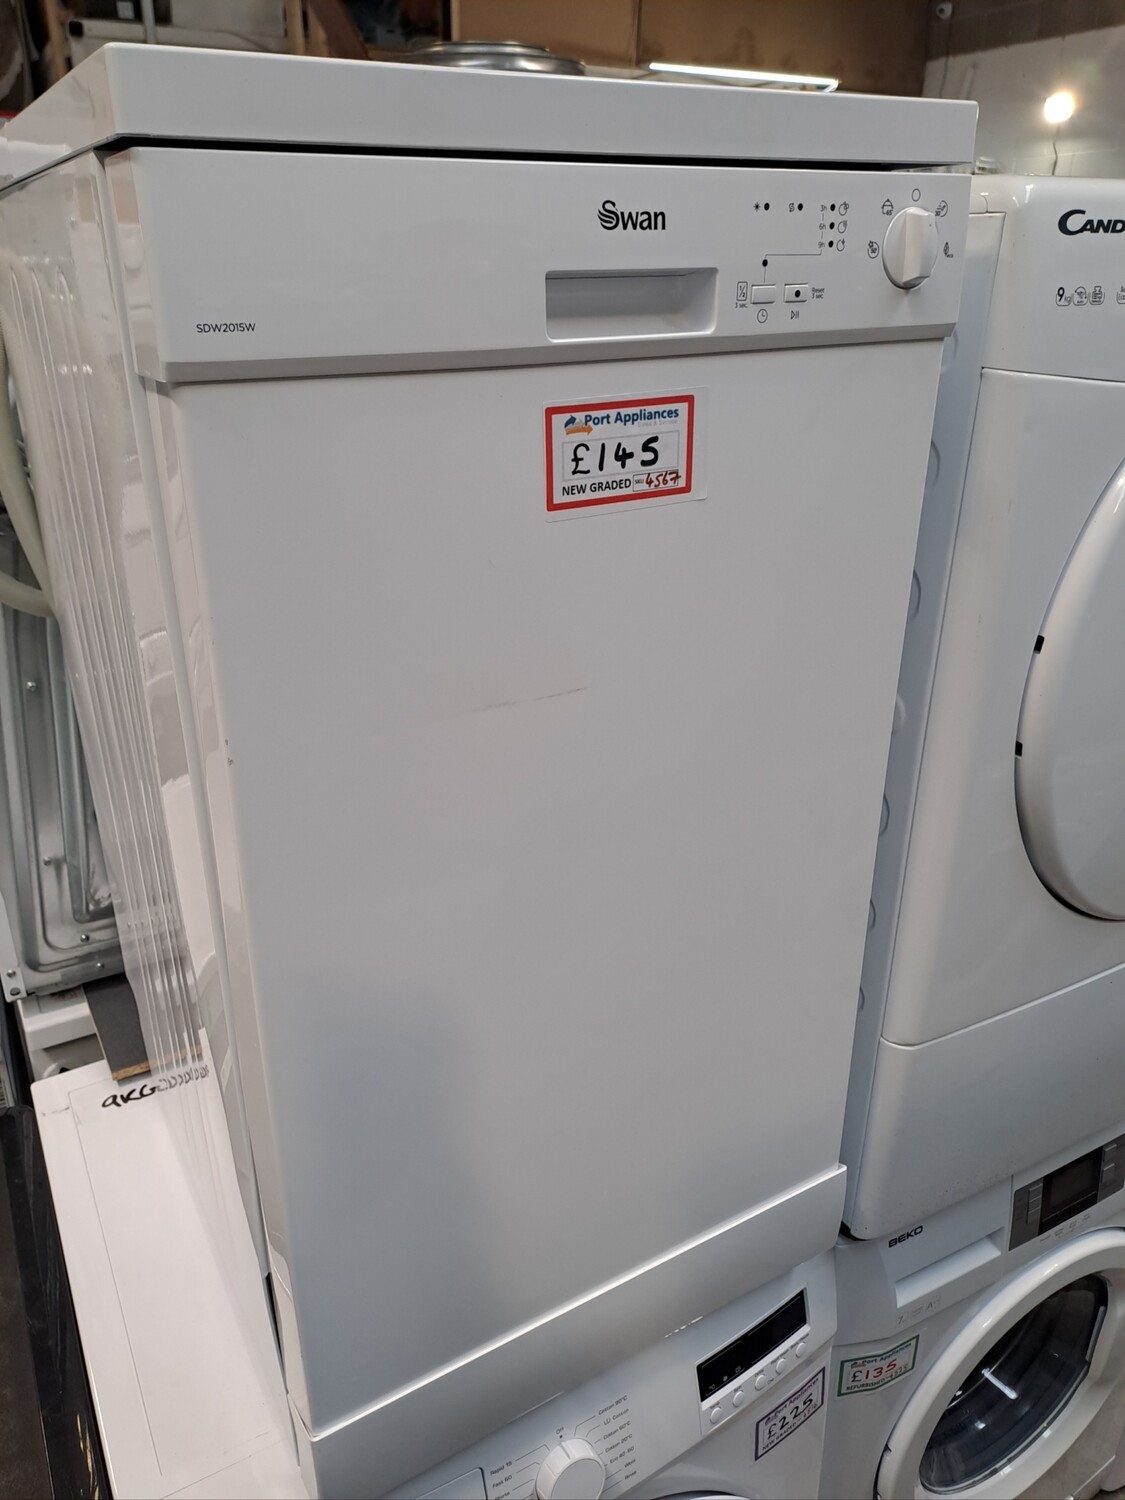 Swan 45cm Freestanding Slimline Dishwasher in White - Brand New + 12 Months Guarantee 